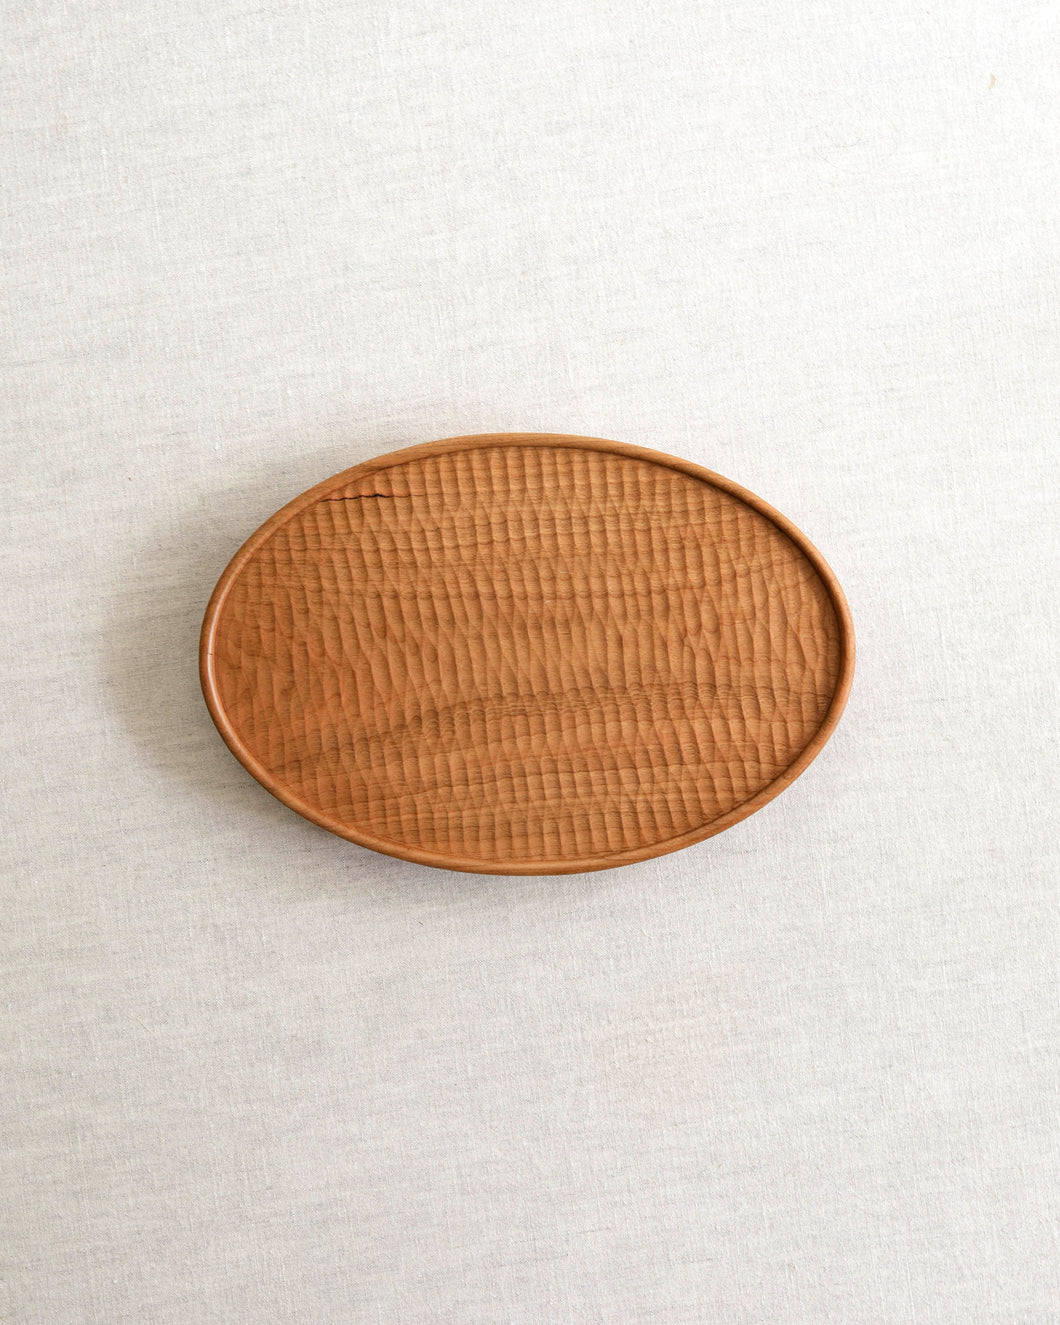 NAMU Carved Cherry Wood Plate / Tray (9.8